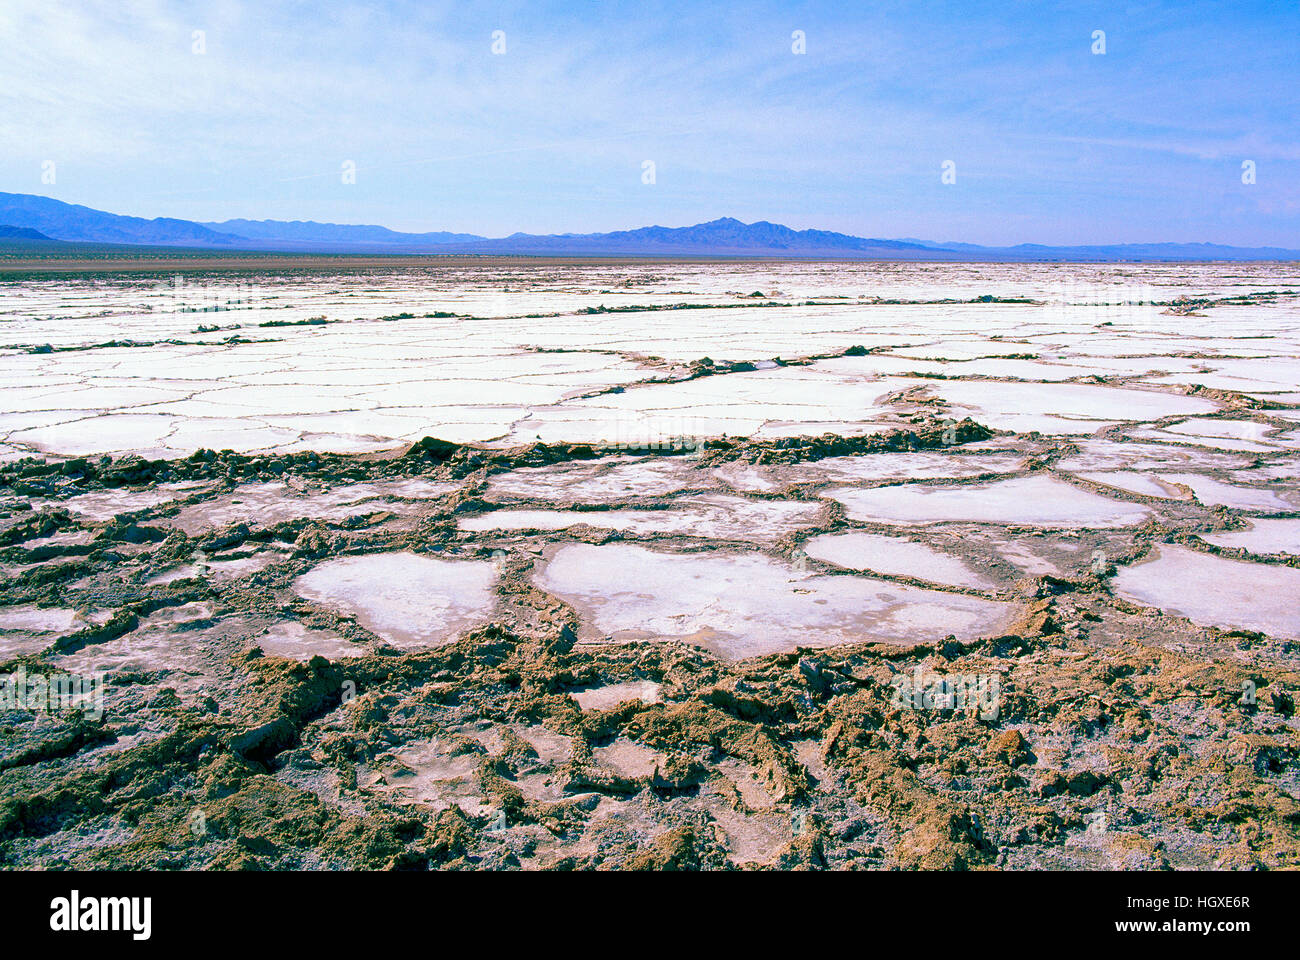 Bristol Dry Lake Bed in Mojave Desert near Amboy, California, USA - Salt Flats after a Heavy Rainfall Stock Photo